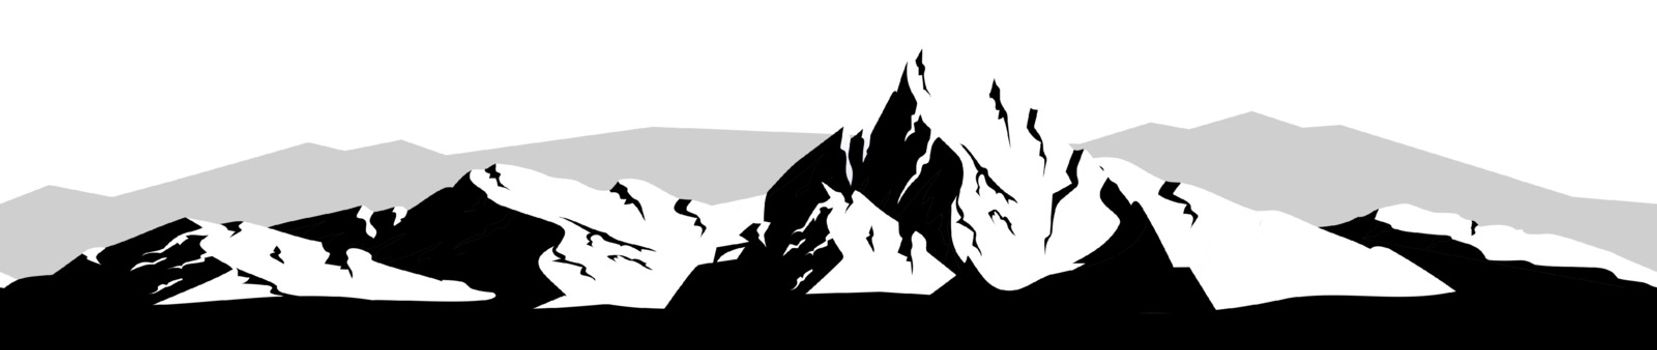 Mountain landscape black silhouette seamless border. Snowy peak monochrome vector illustration. Snow rock decorative ornament design. Wild nature scenery repeating pattern